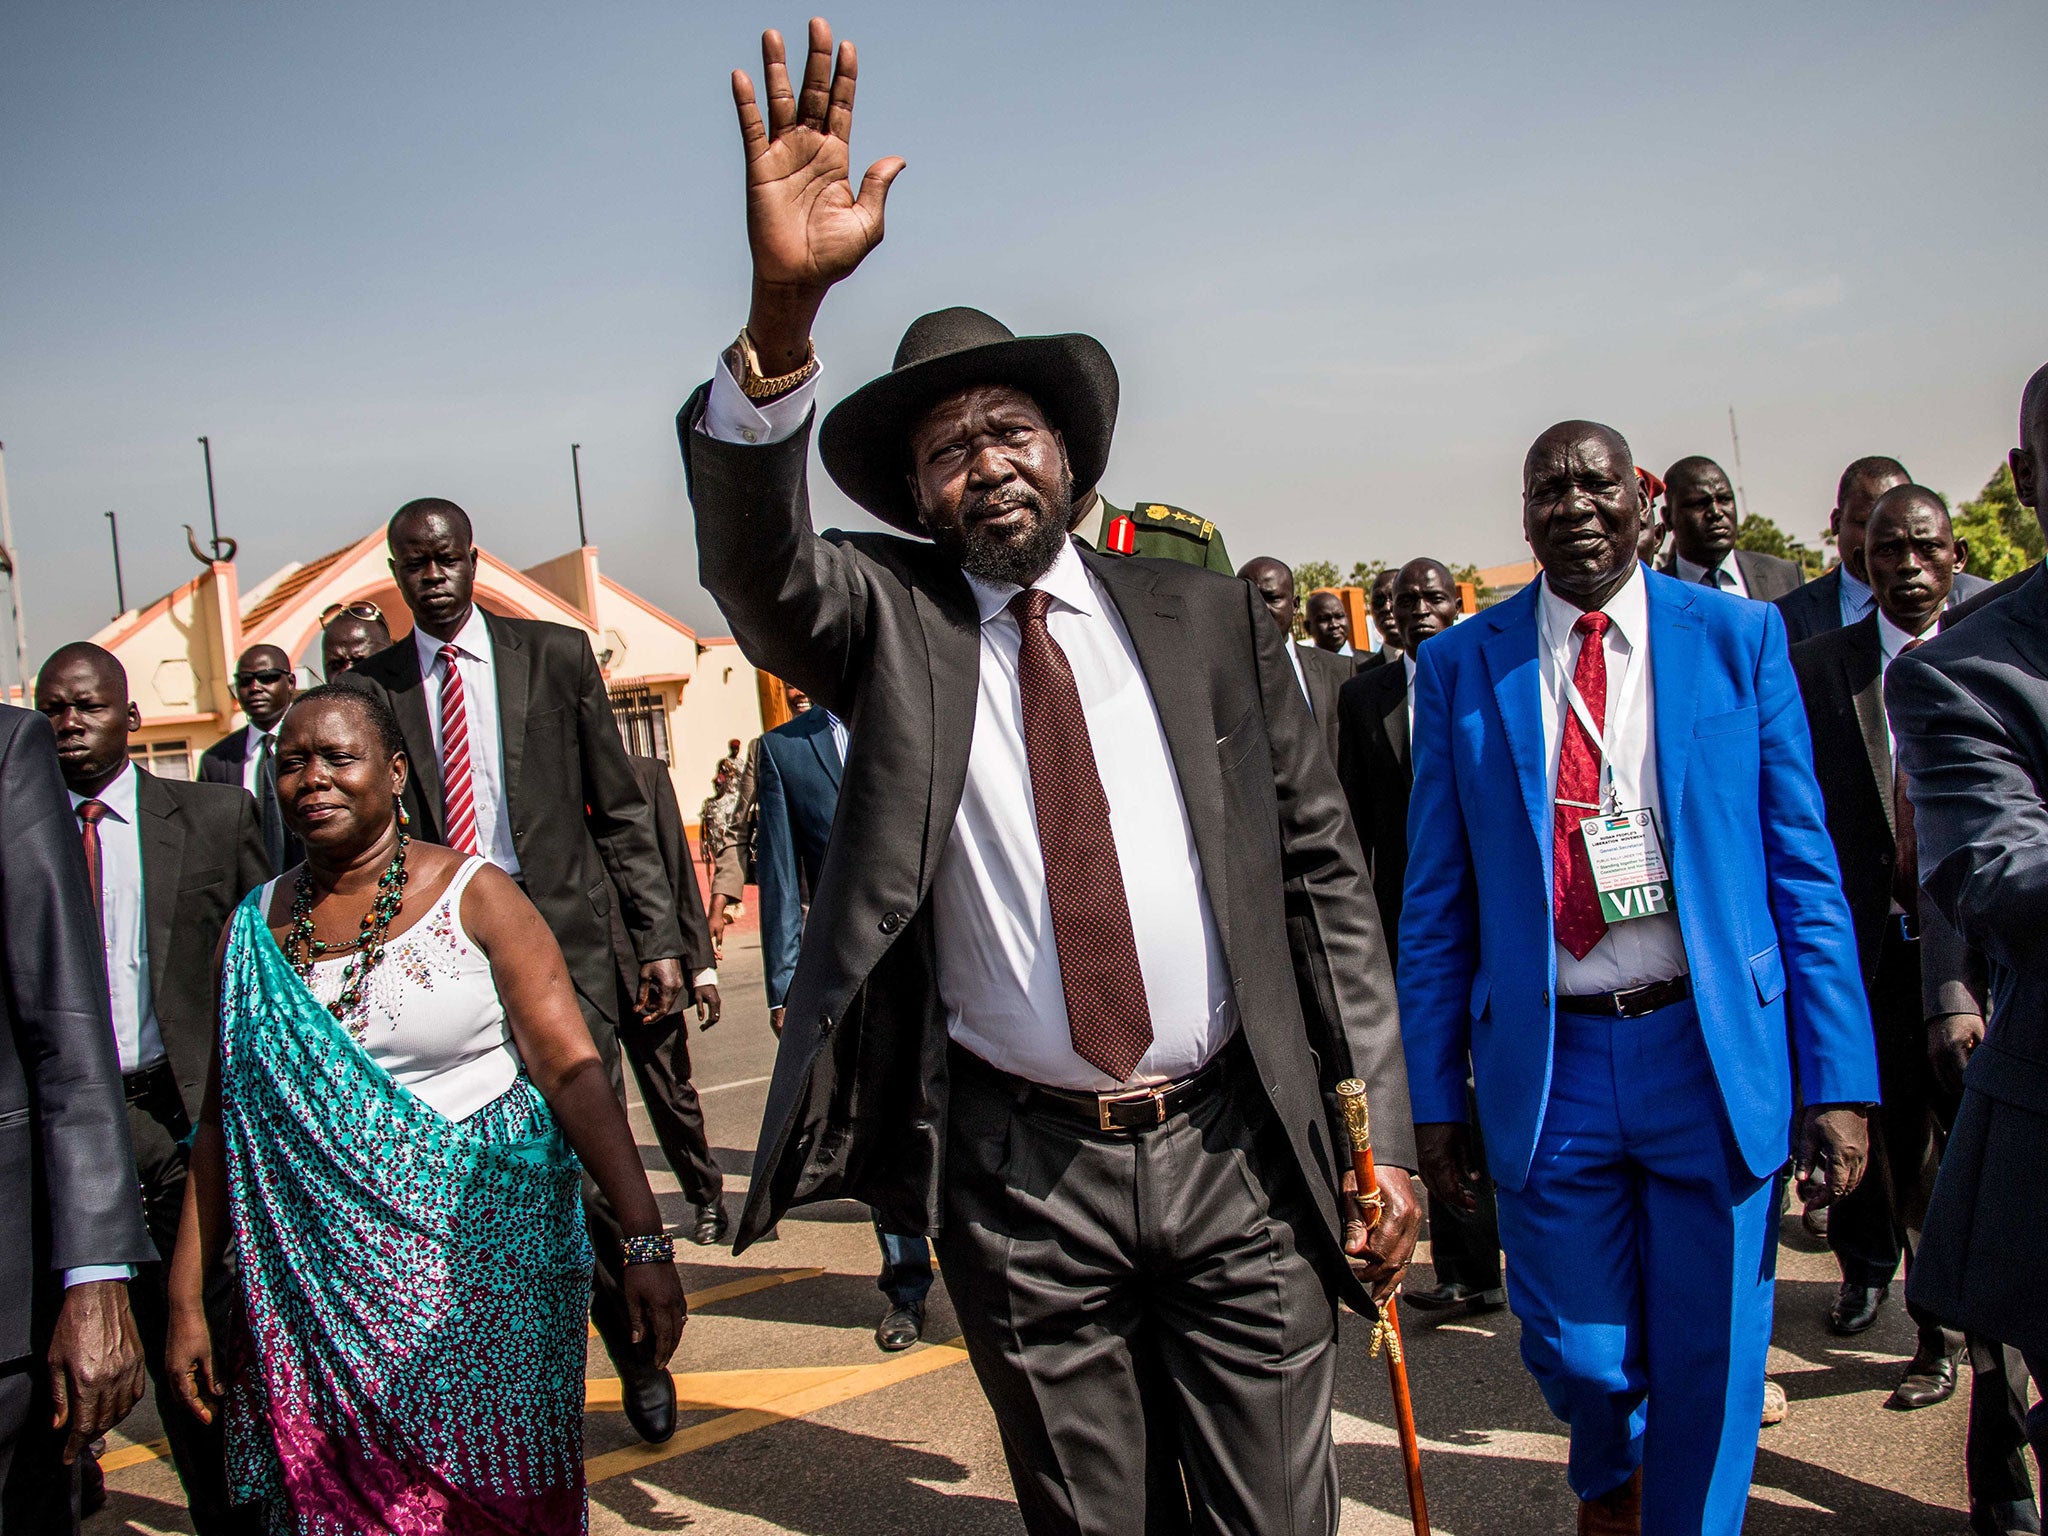 South Sudan President Salva Kiir arrives for a political rally in Juba